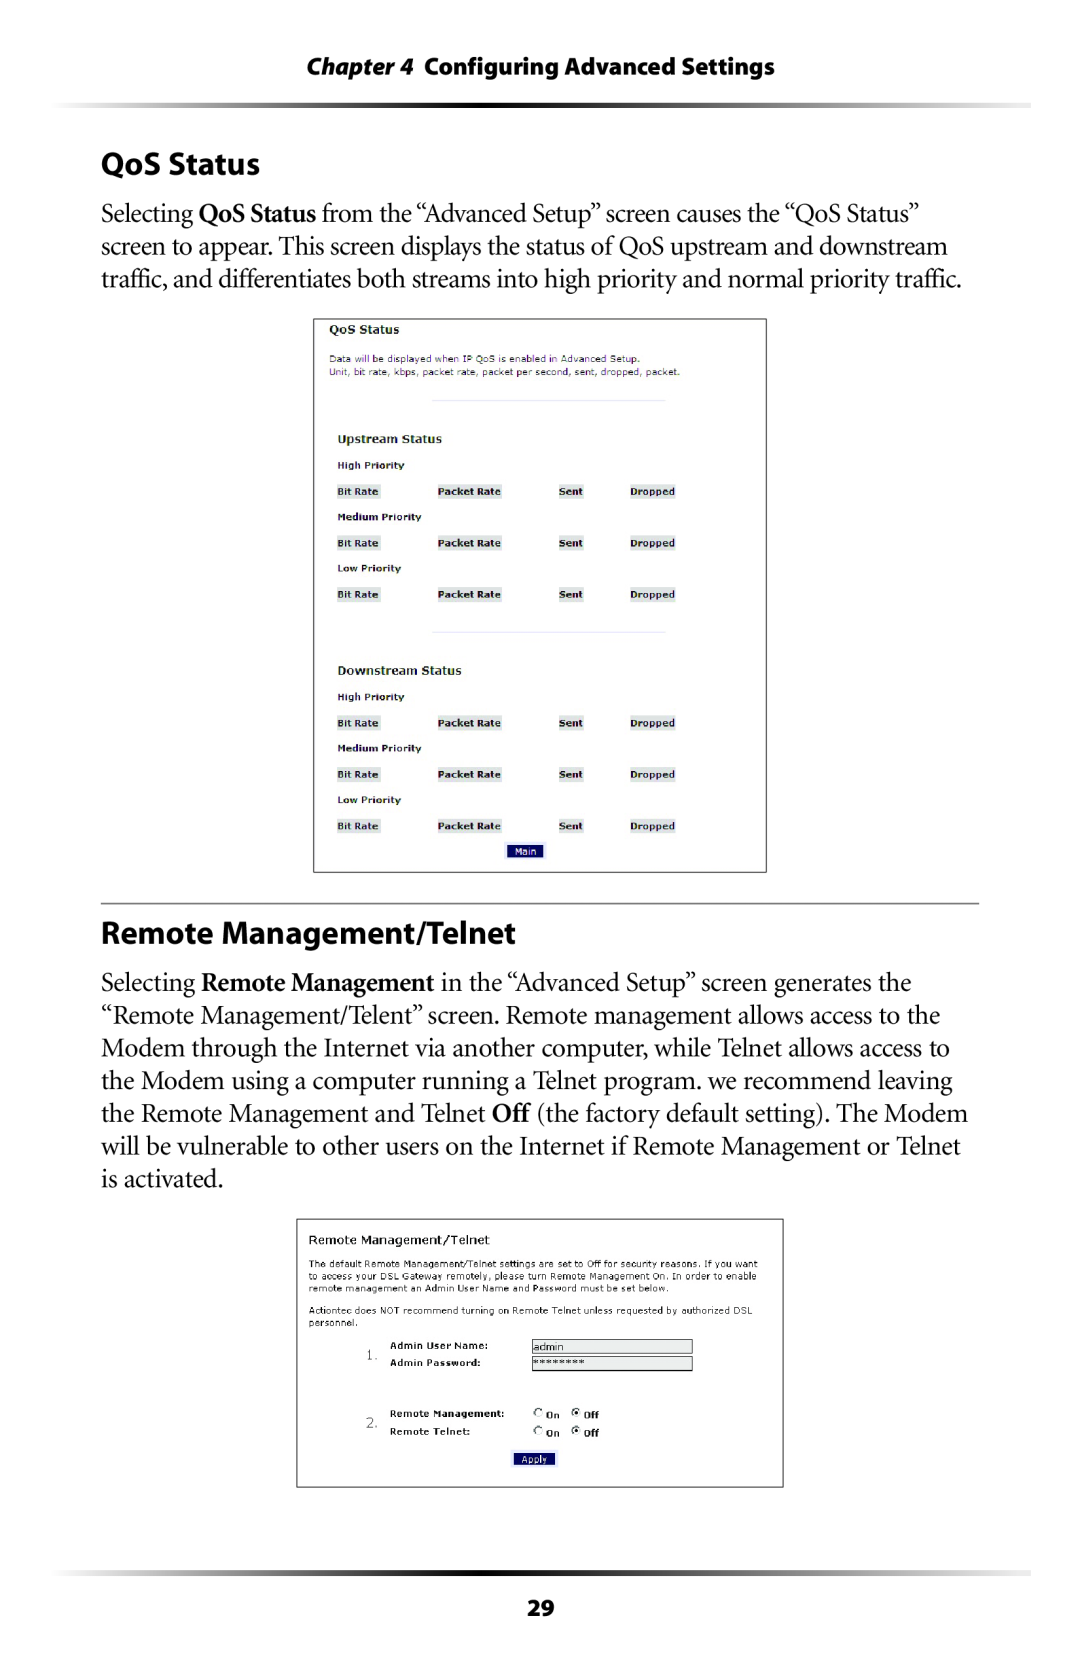 Verizon GT701C user manual QoS Status, Remote Management/Telnet 